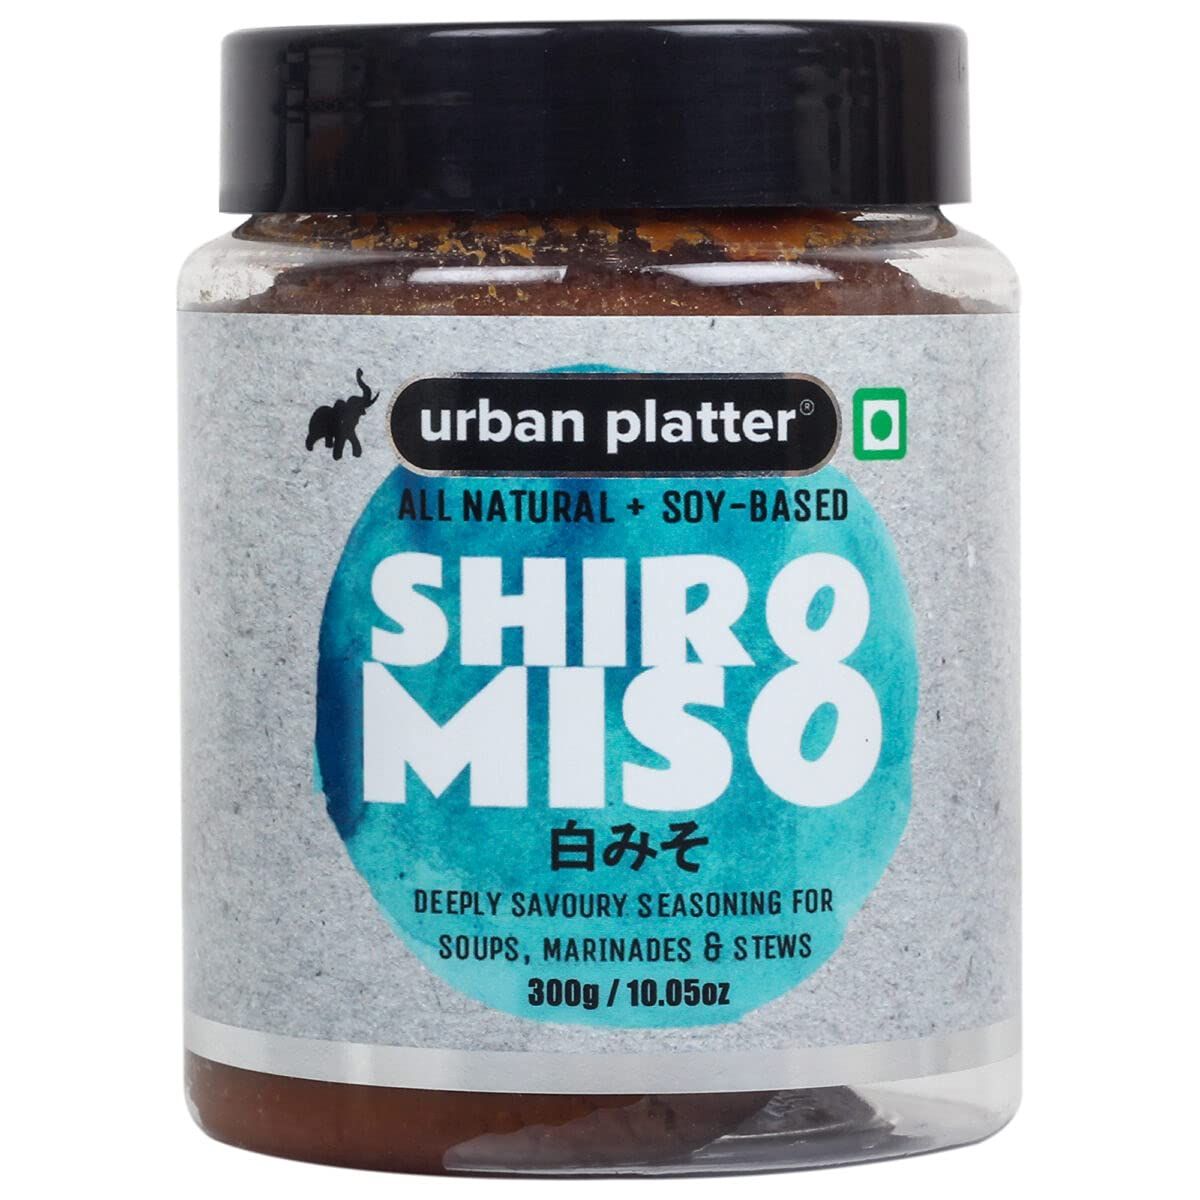 Urban Platter Shiro Miso Paste Image